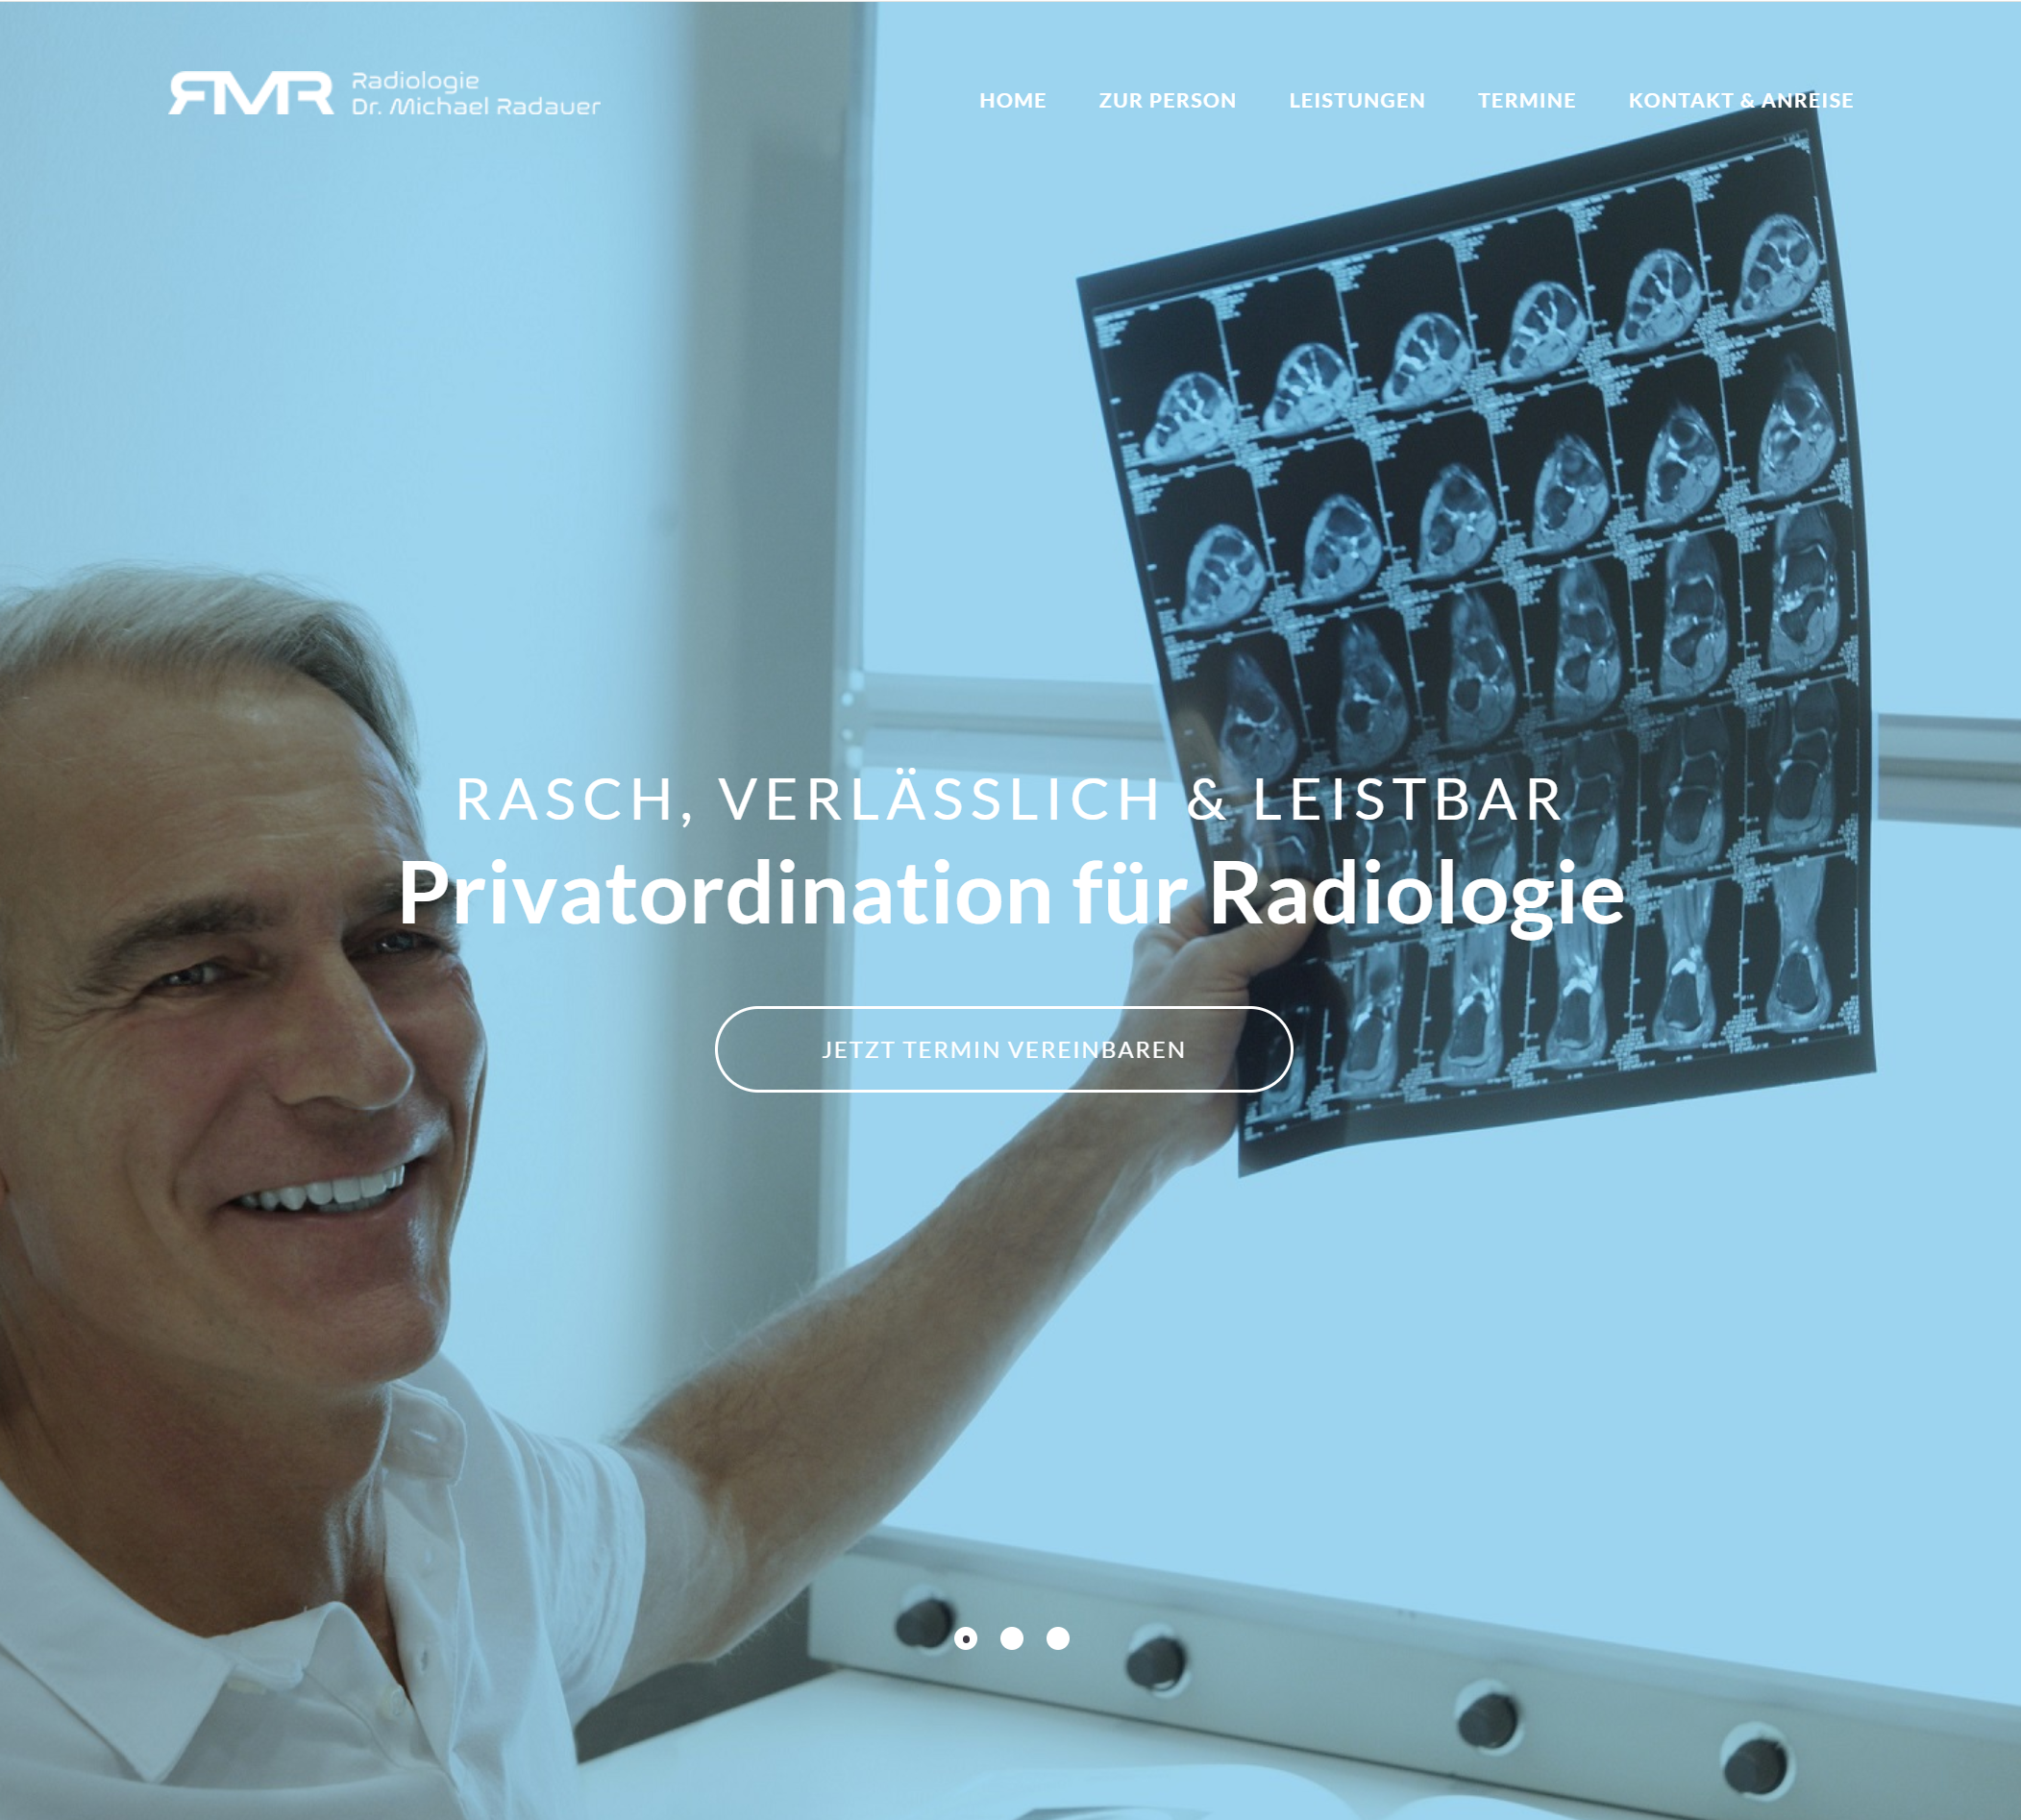 rmr-radiologie.at